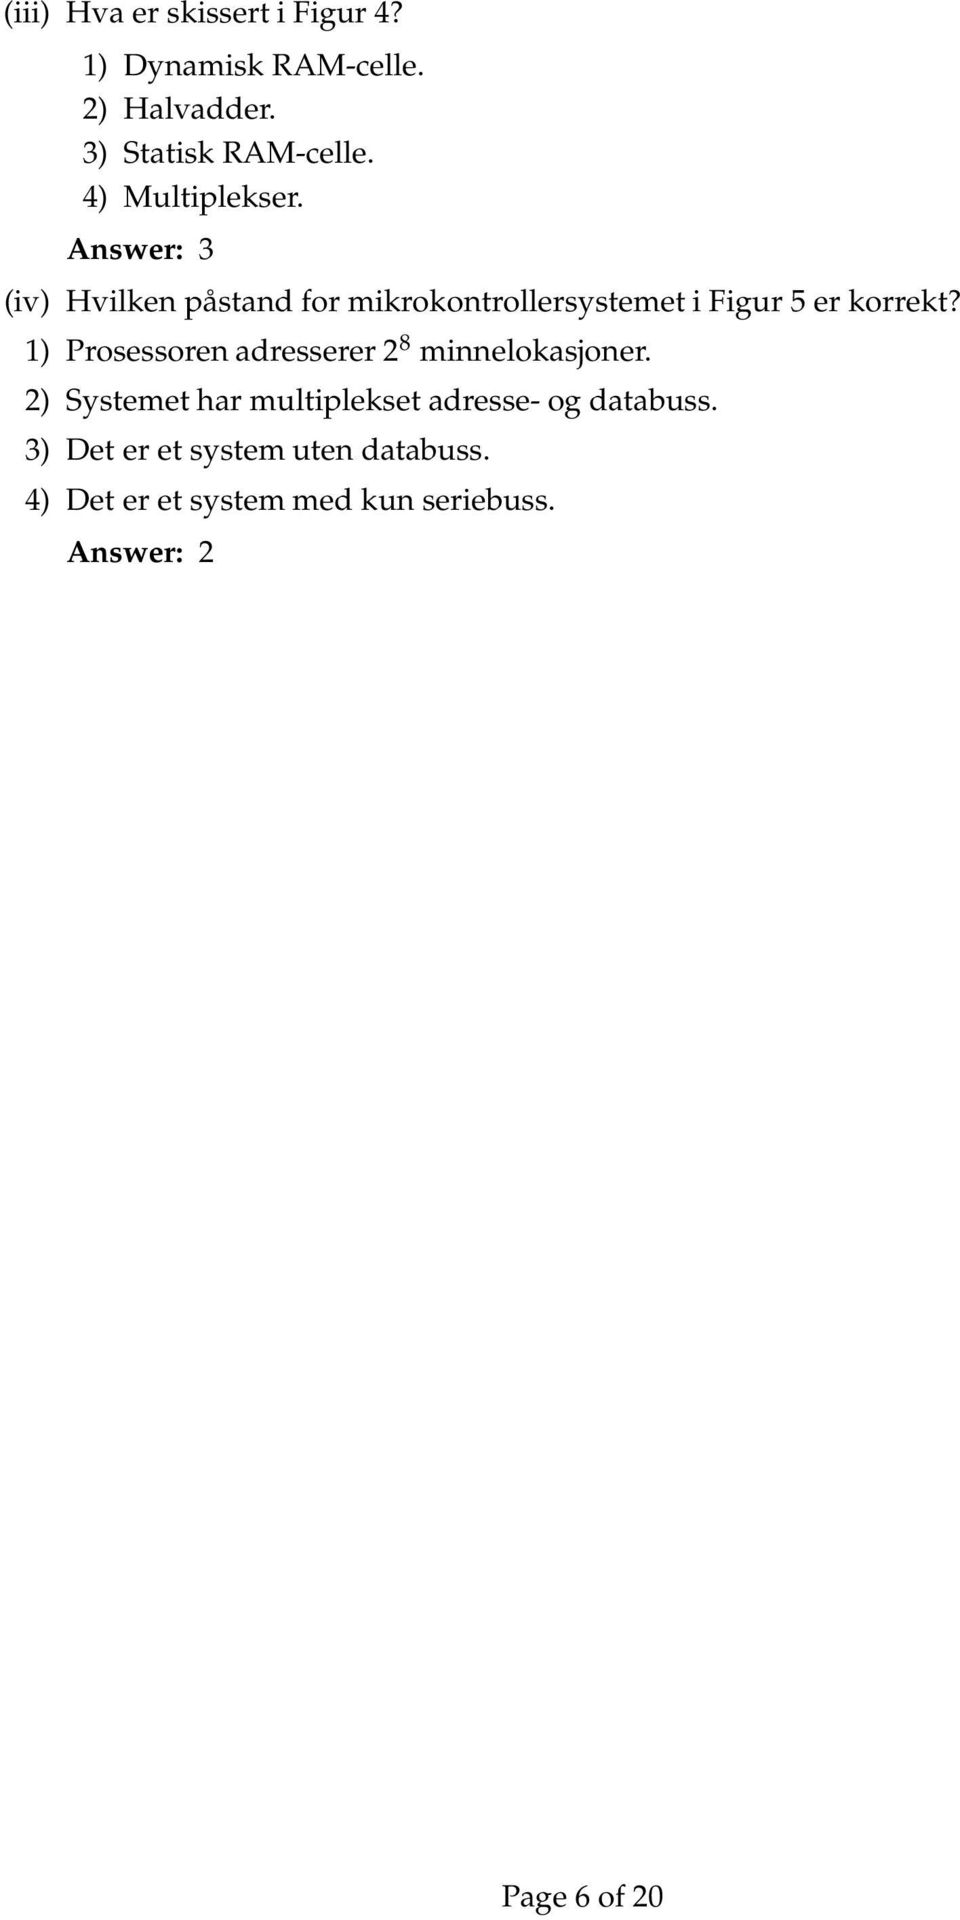 Answer: 3 (iv) Hvilken påstand for mikrokontrollersystemet i Figur 5 er korrekt?